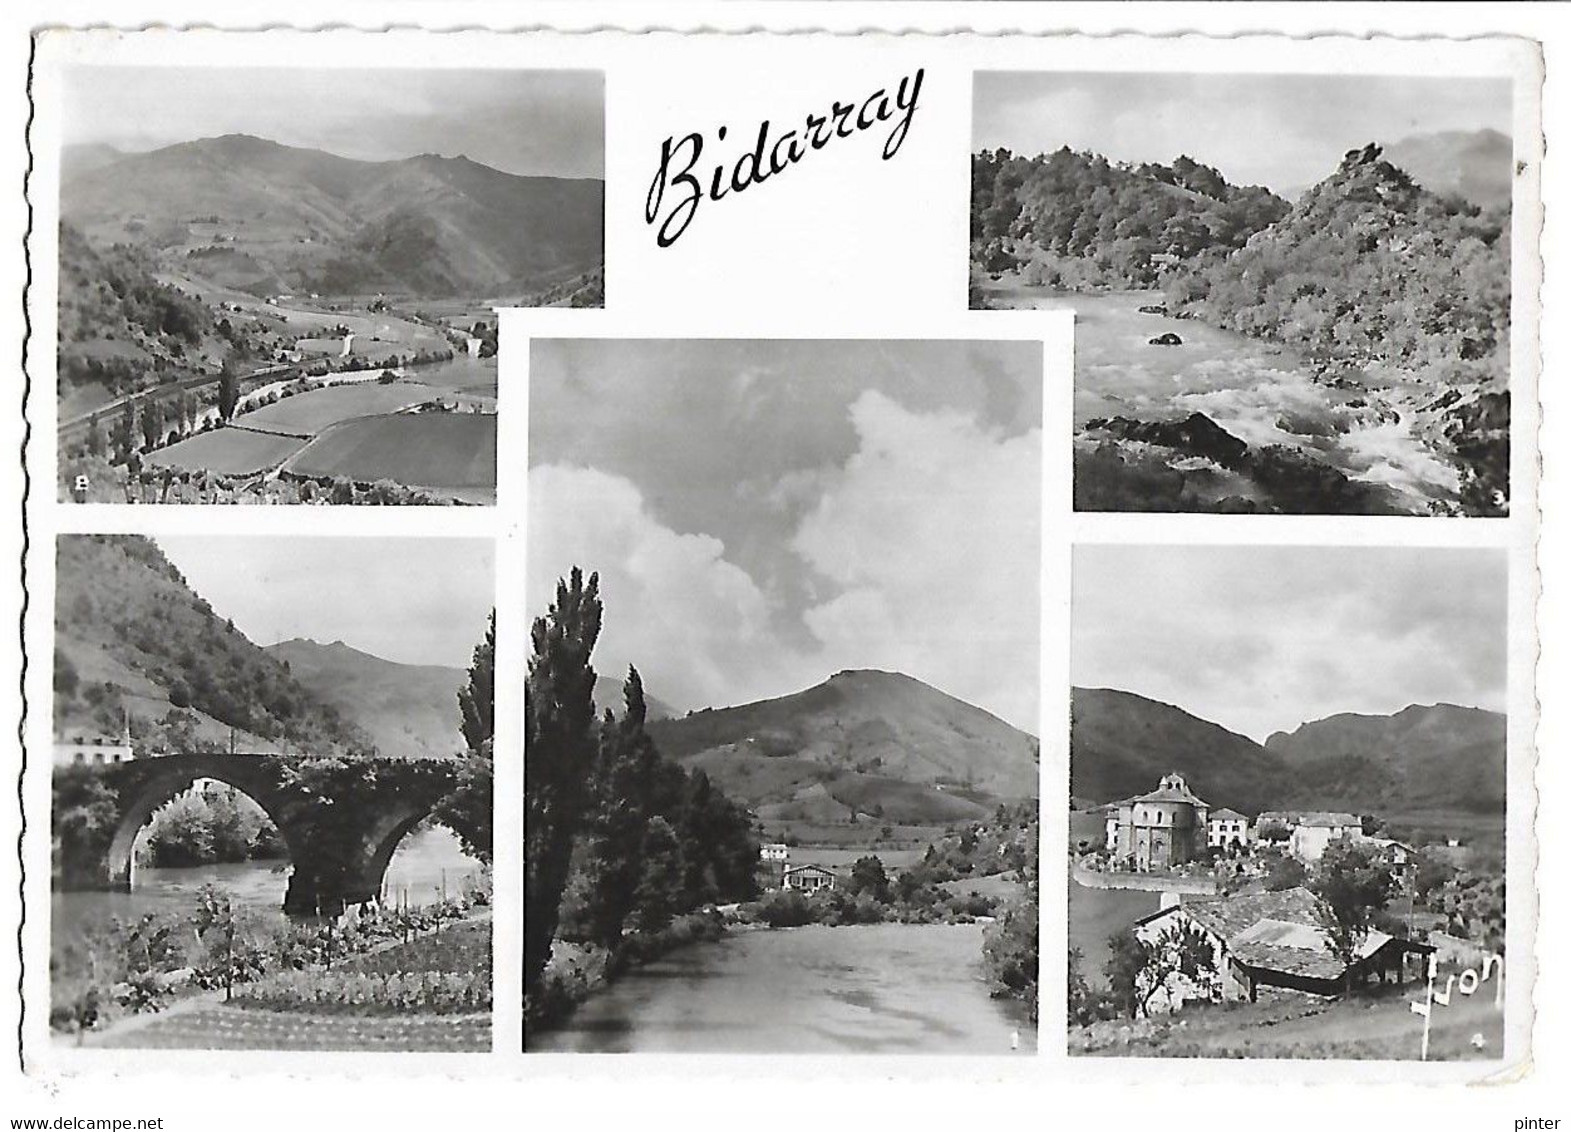 BIDARRAY - Bidarray